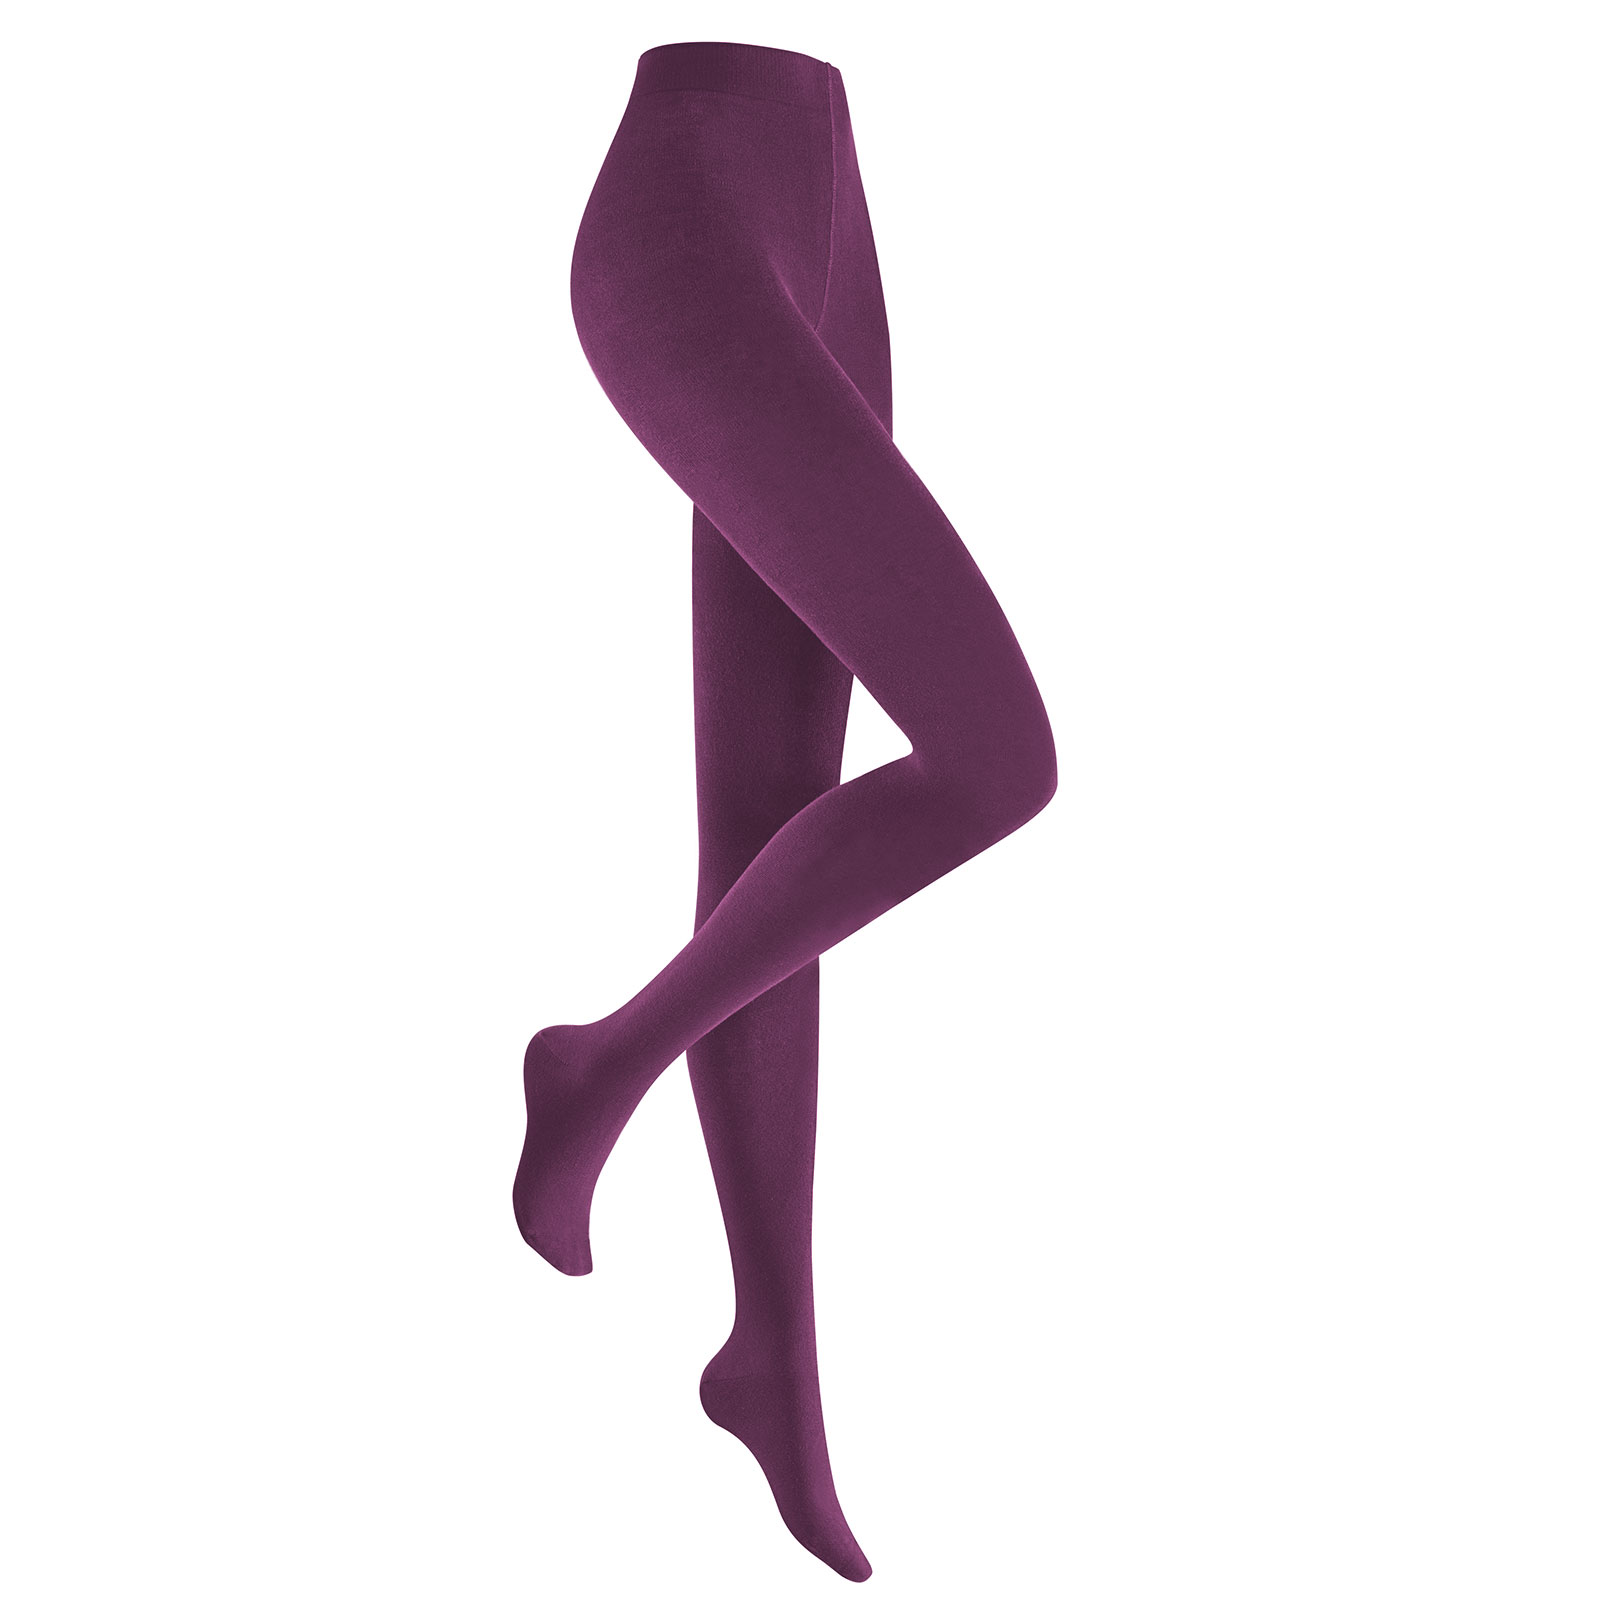 HUDSON Damen RELAX FINE  -  48/50 - Blickdichte Strumpfhose / Strickstrumpfhose mit hohem Baumwollanteil - Sweet lilac (Pink/Violett)